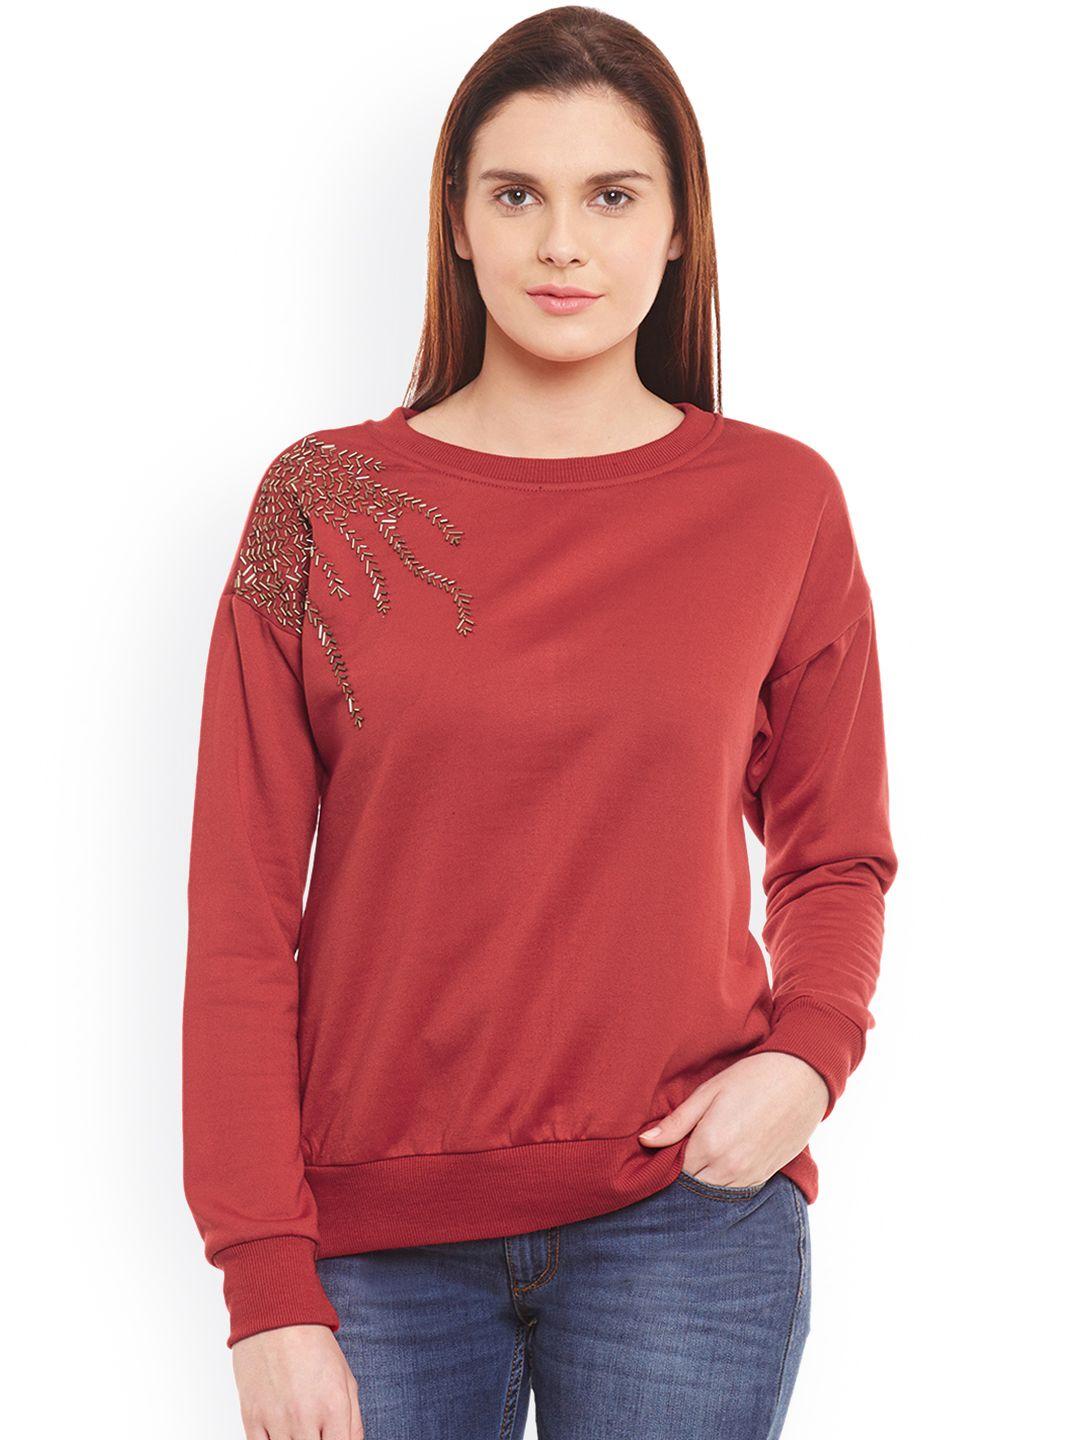 belle-fille-red-sweatshirt-with-embellished-detail